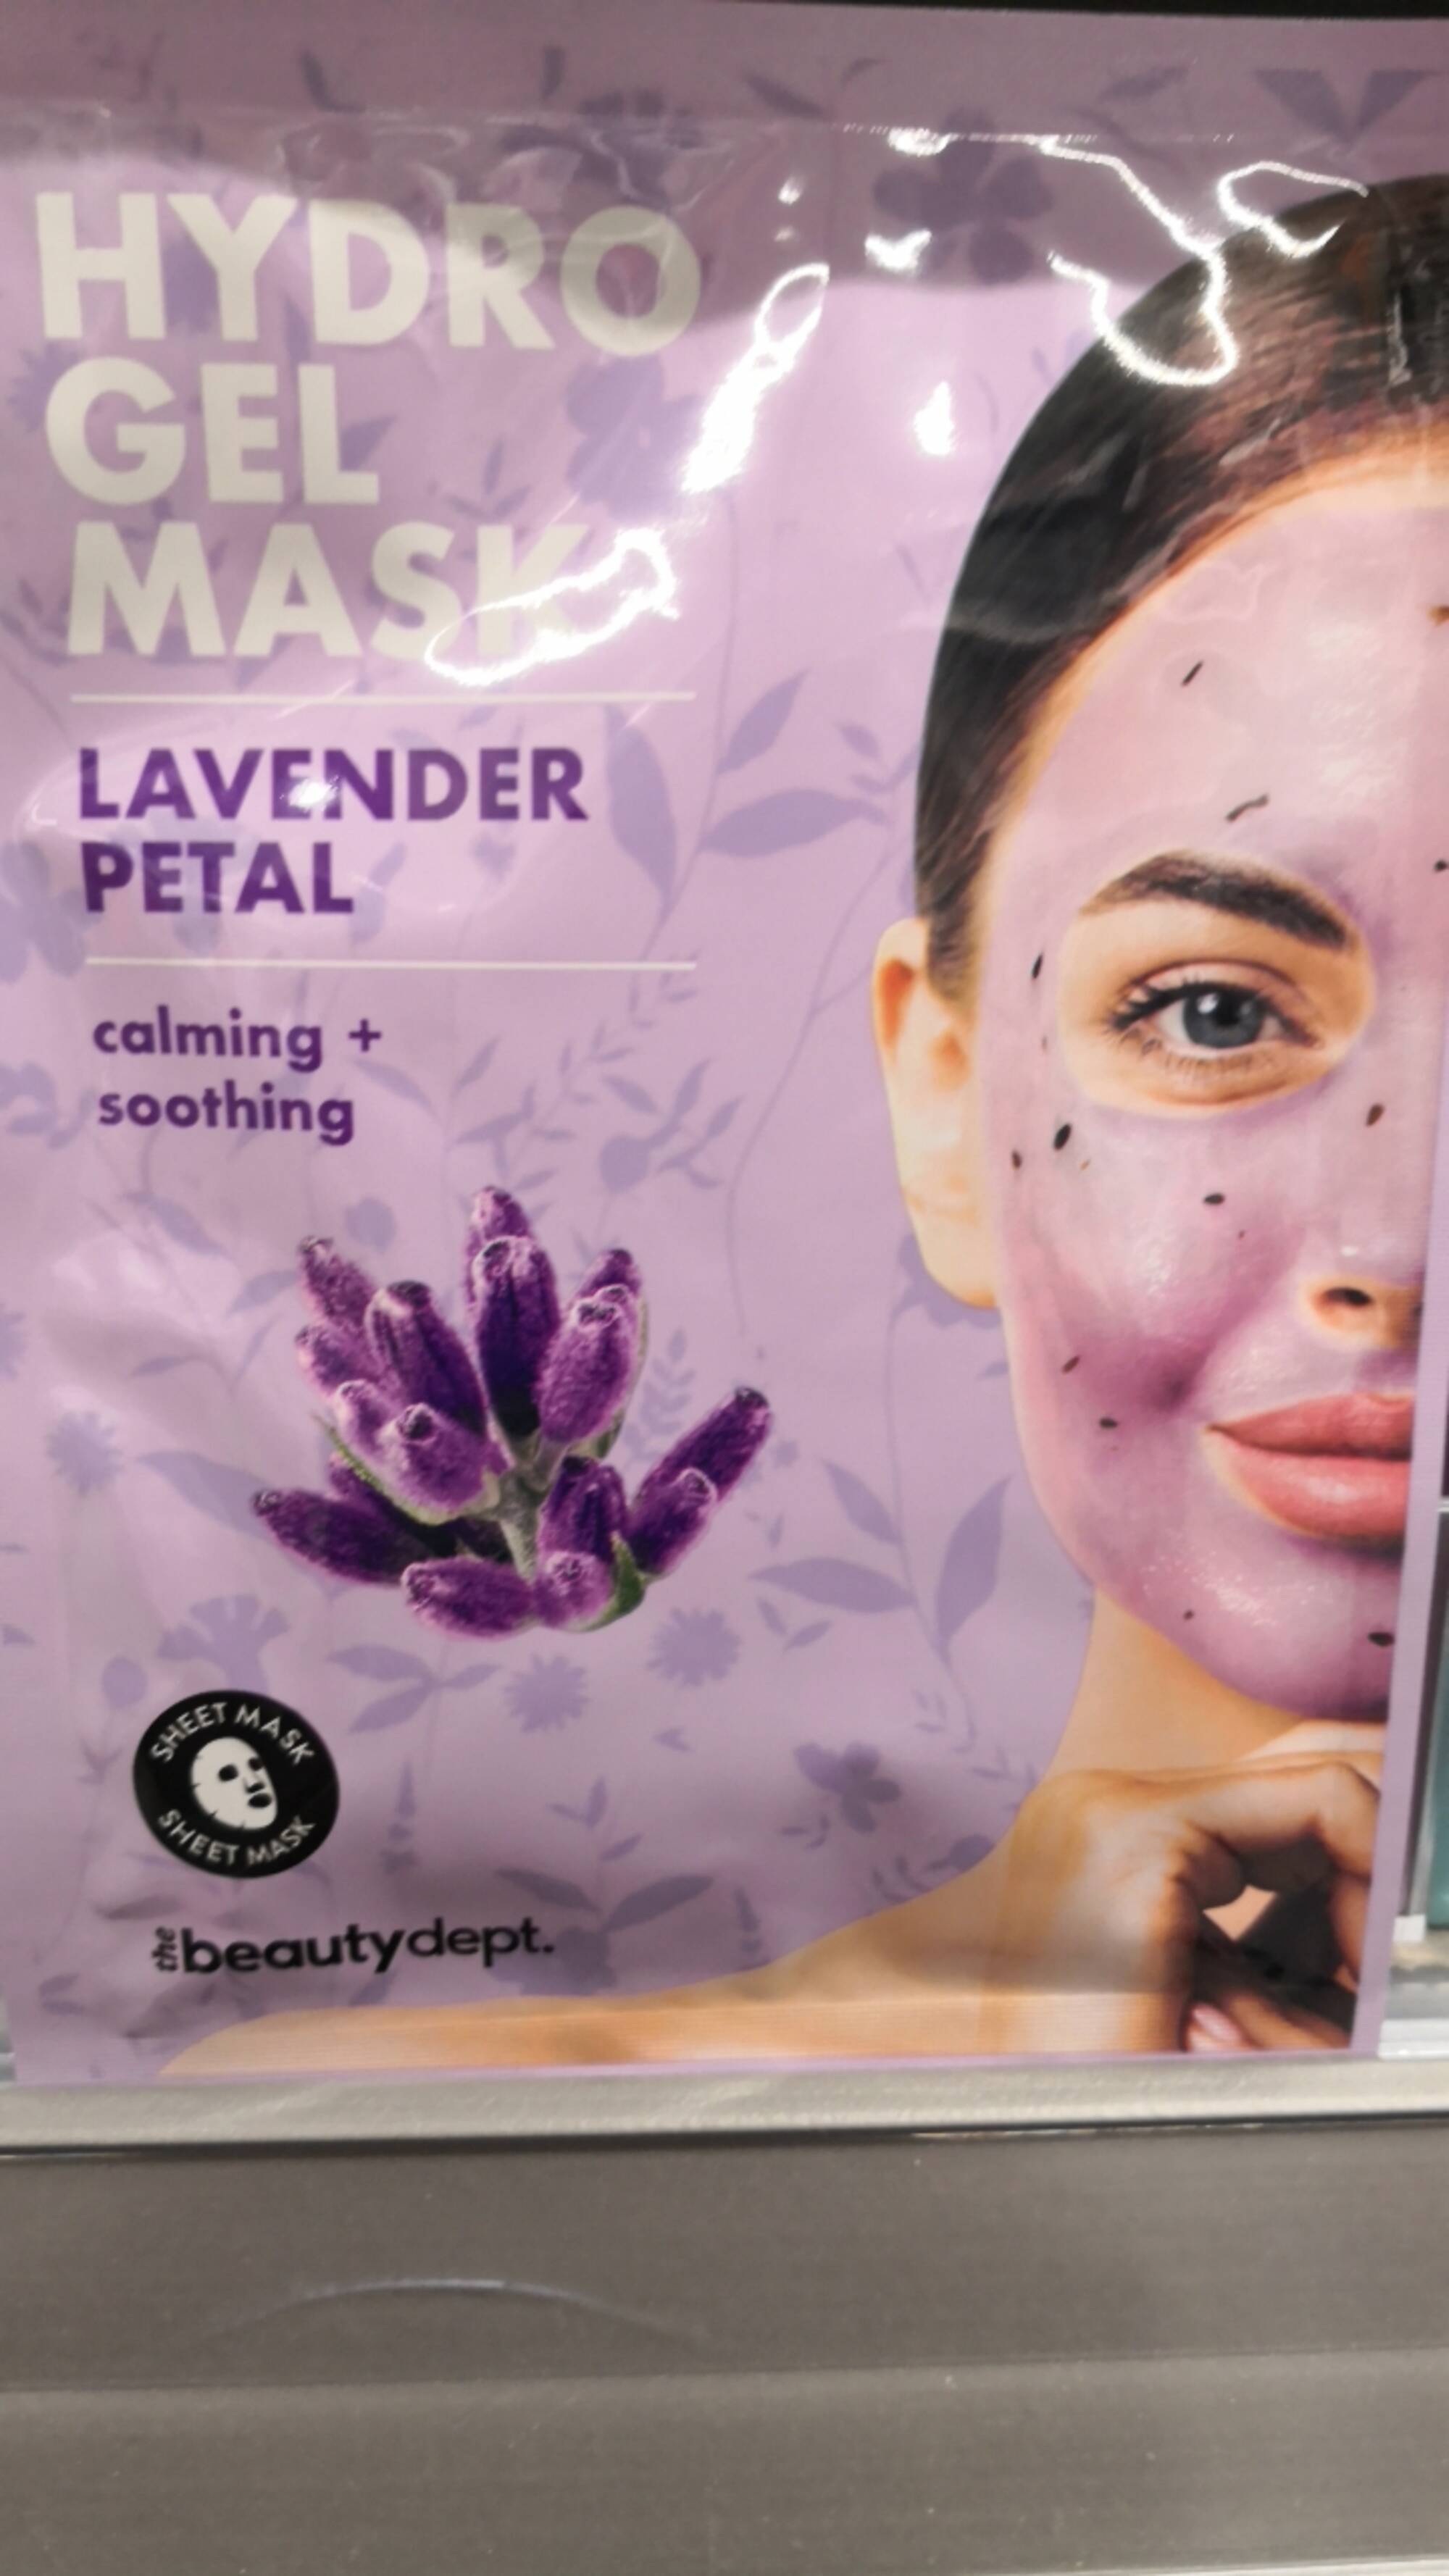 THE BEAUTY DEPT - Hydro gel masque lavender petal